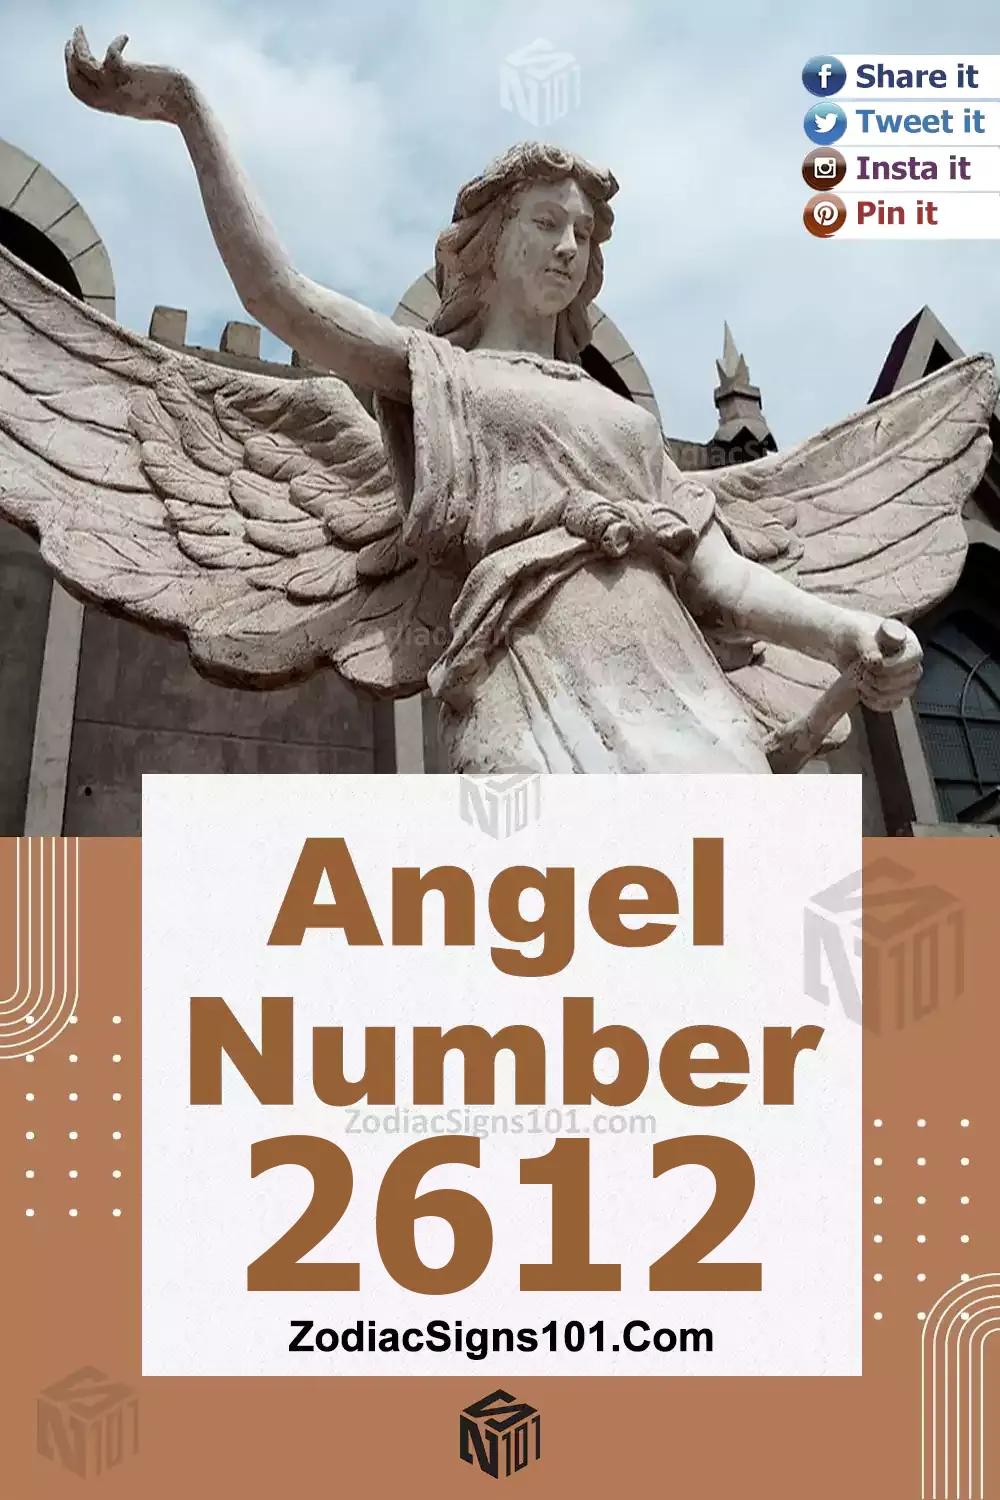 2612-Angel-Number-Meaning.jpg